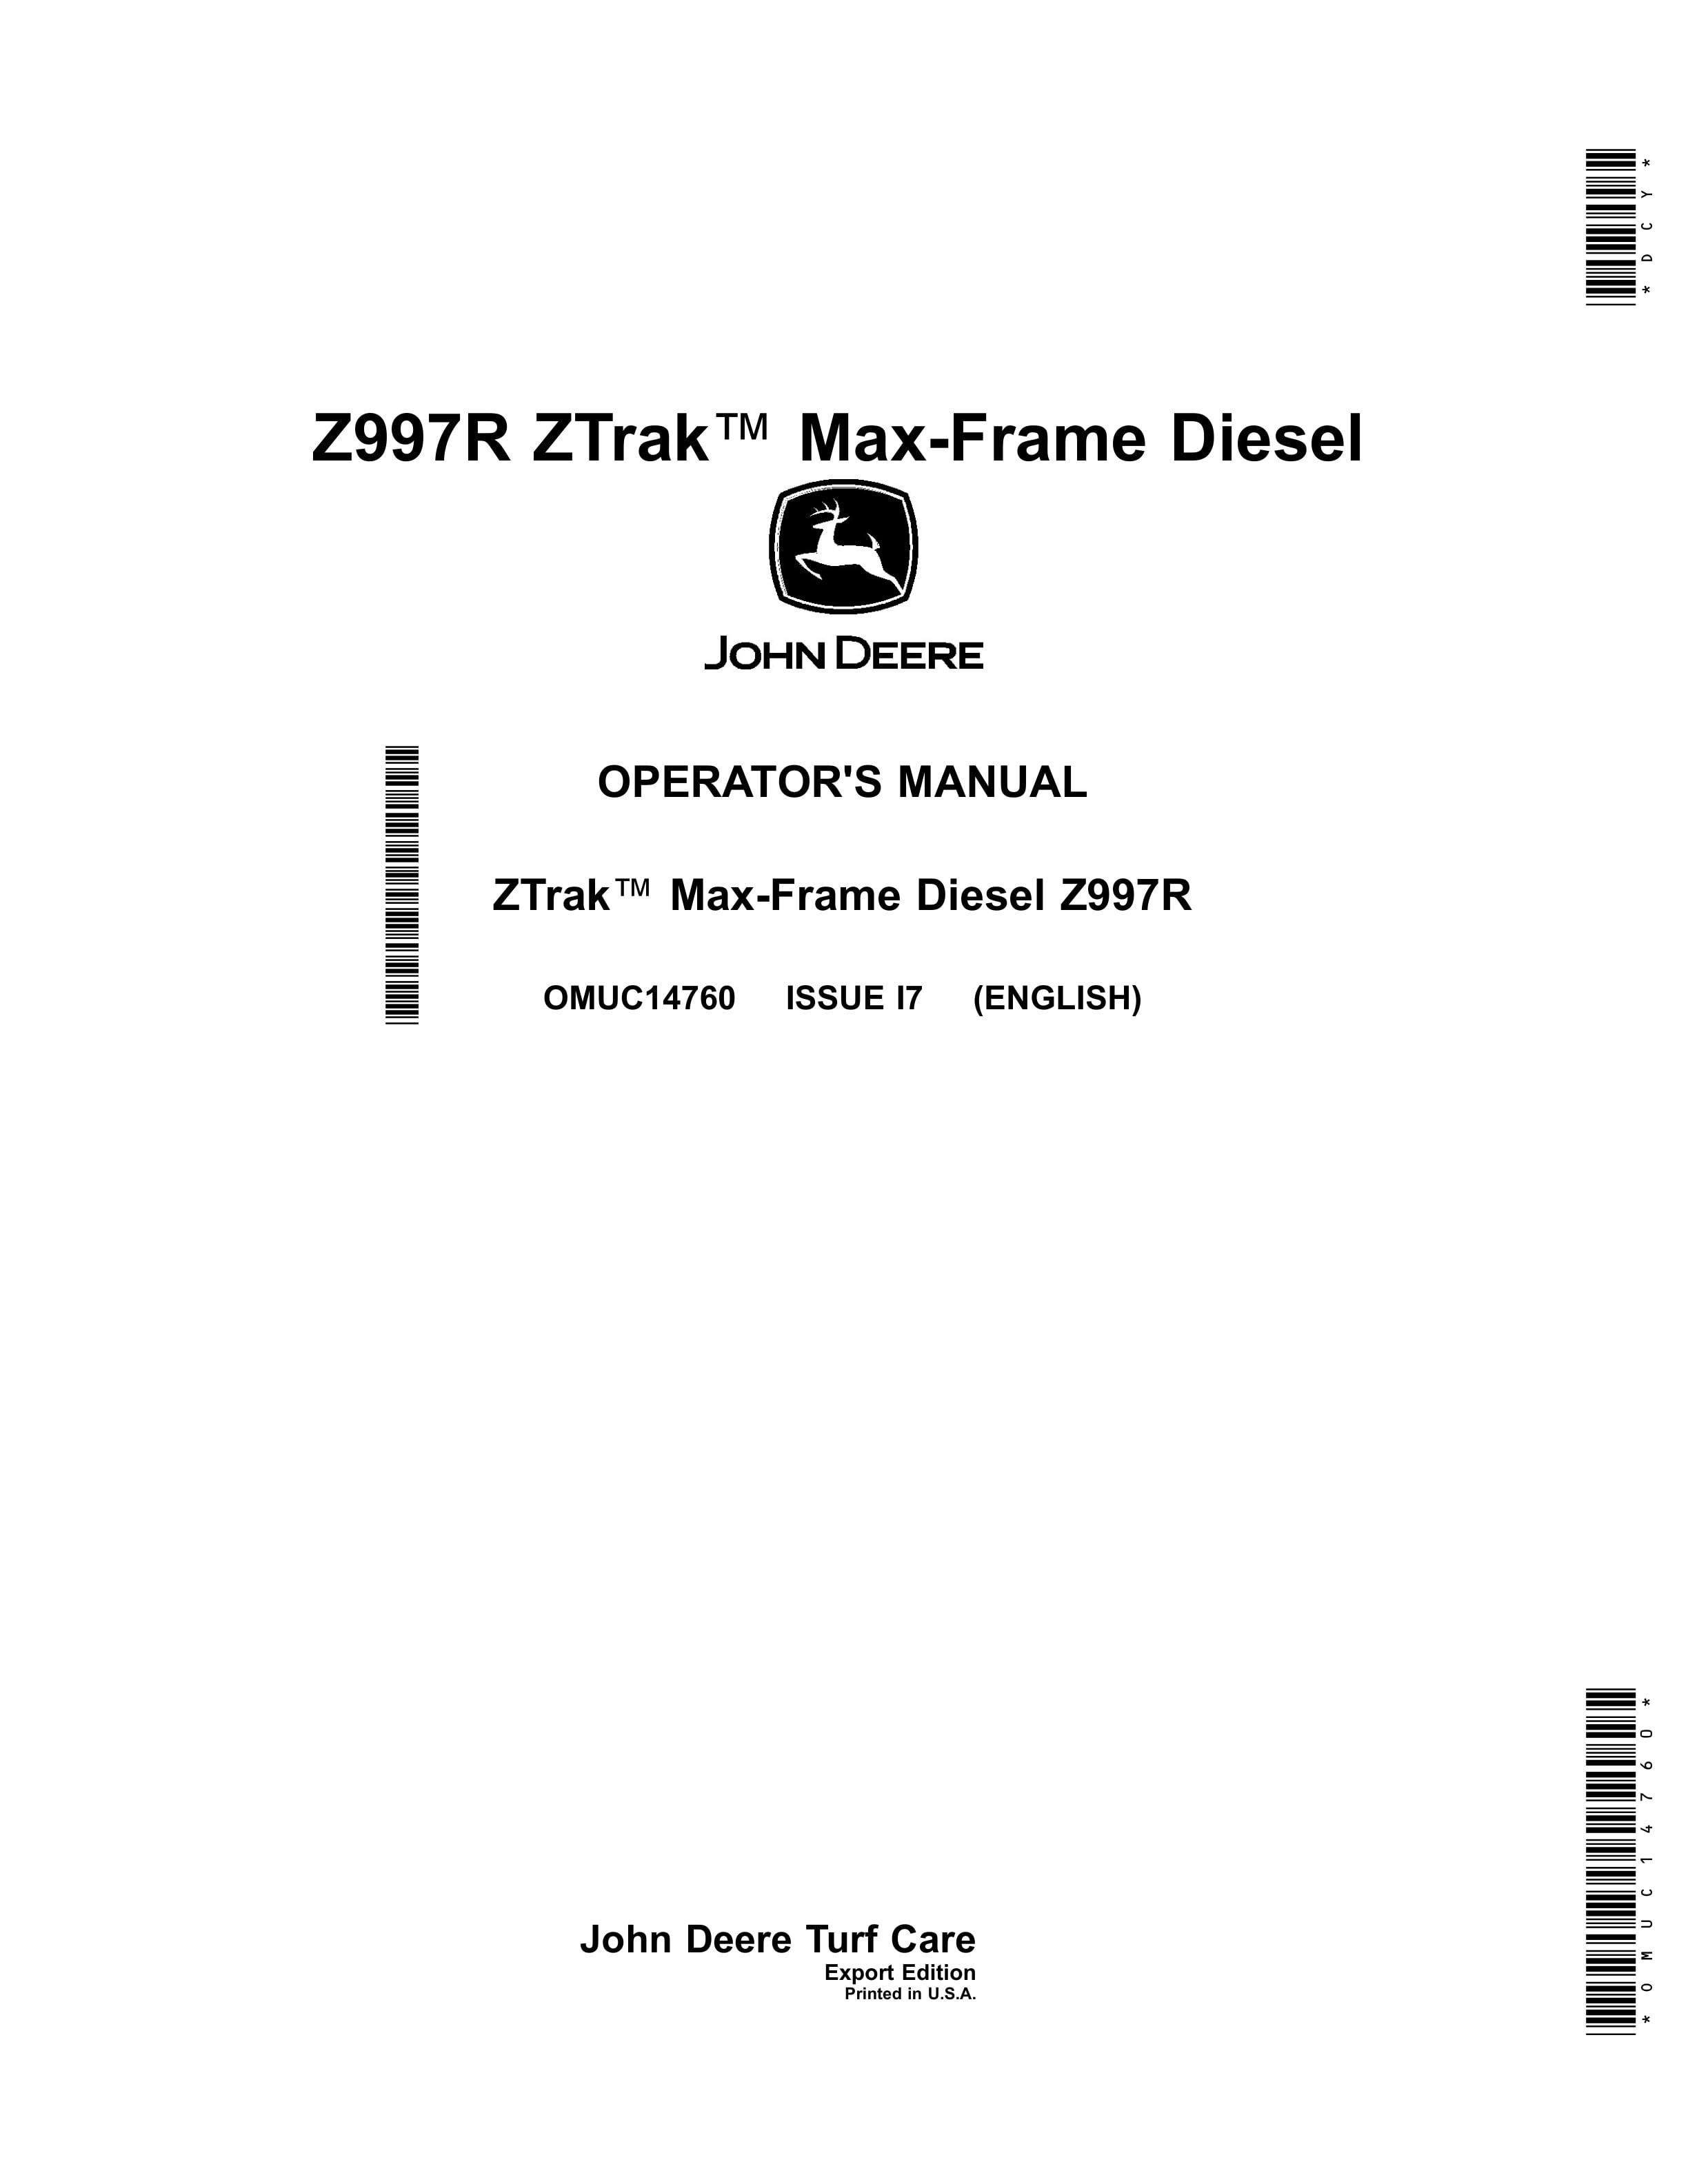 John Deere Z997R ZTrak Max Frame Diesel Operator Manual OMUC14760 1